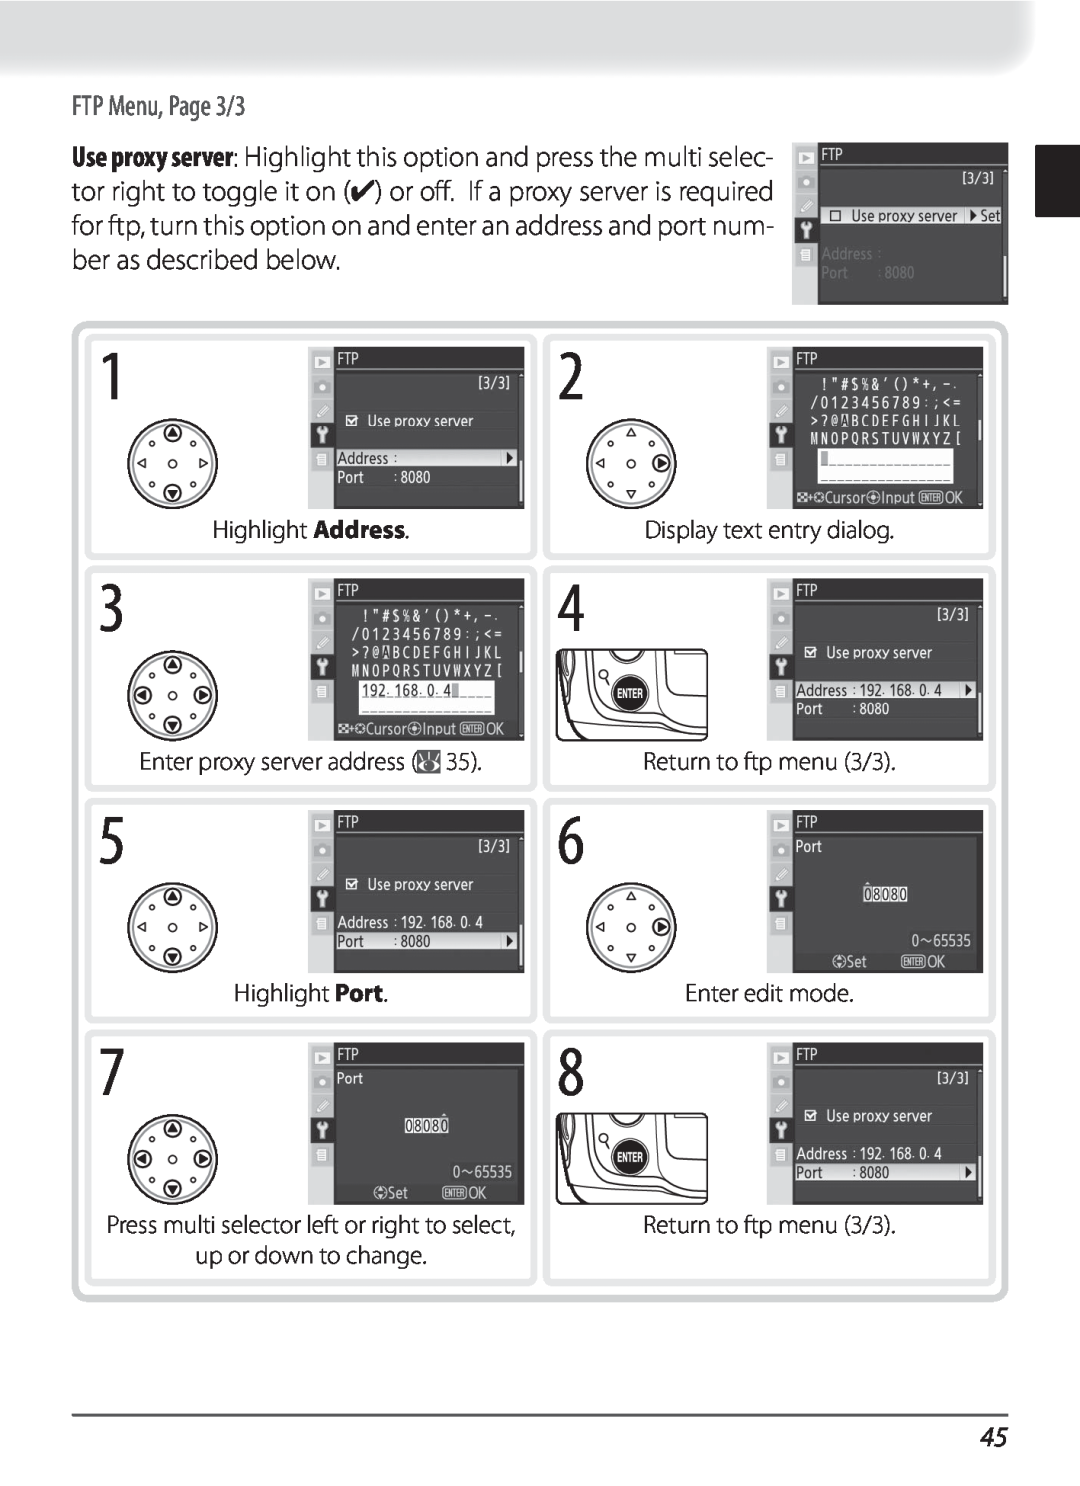 Nikon WT-3 user manual FTP Menu, Page 3/3 